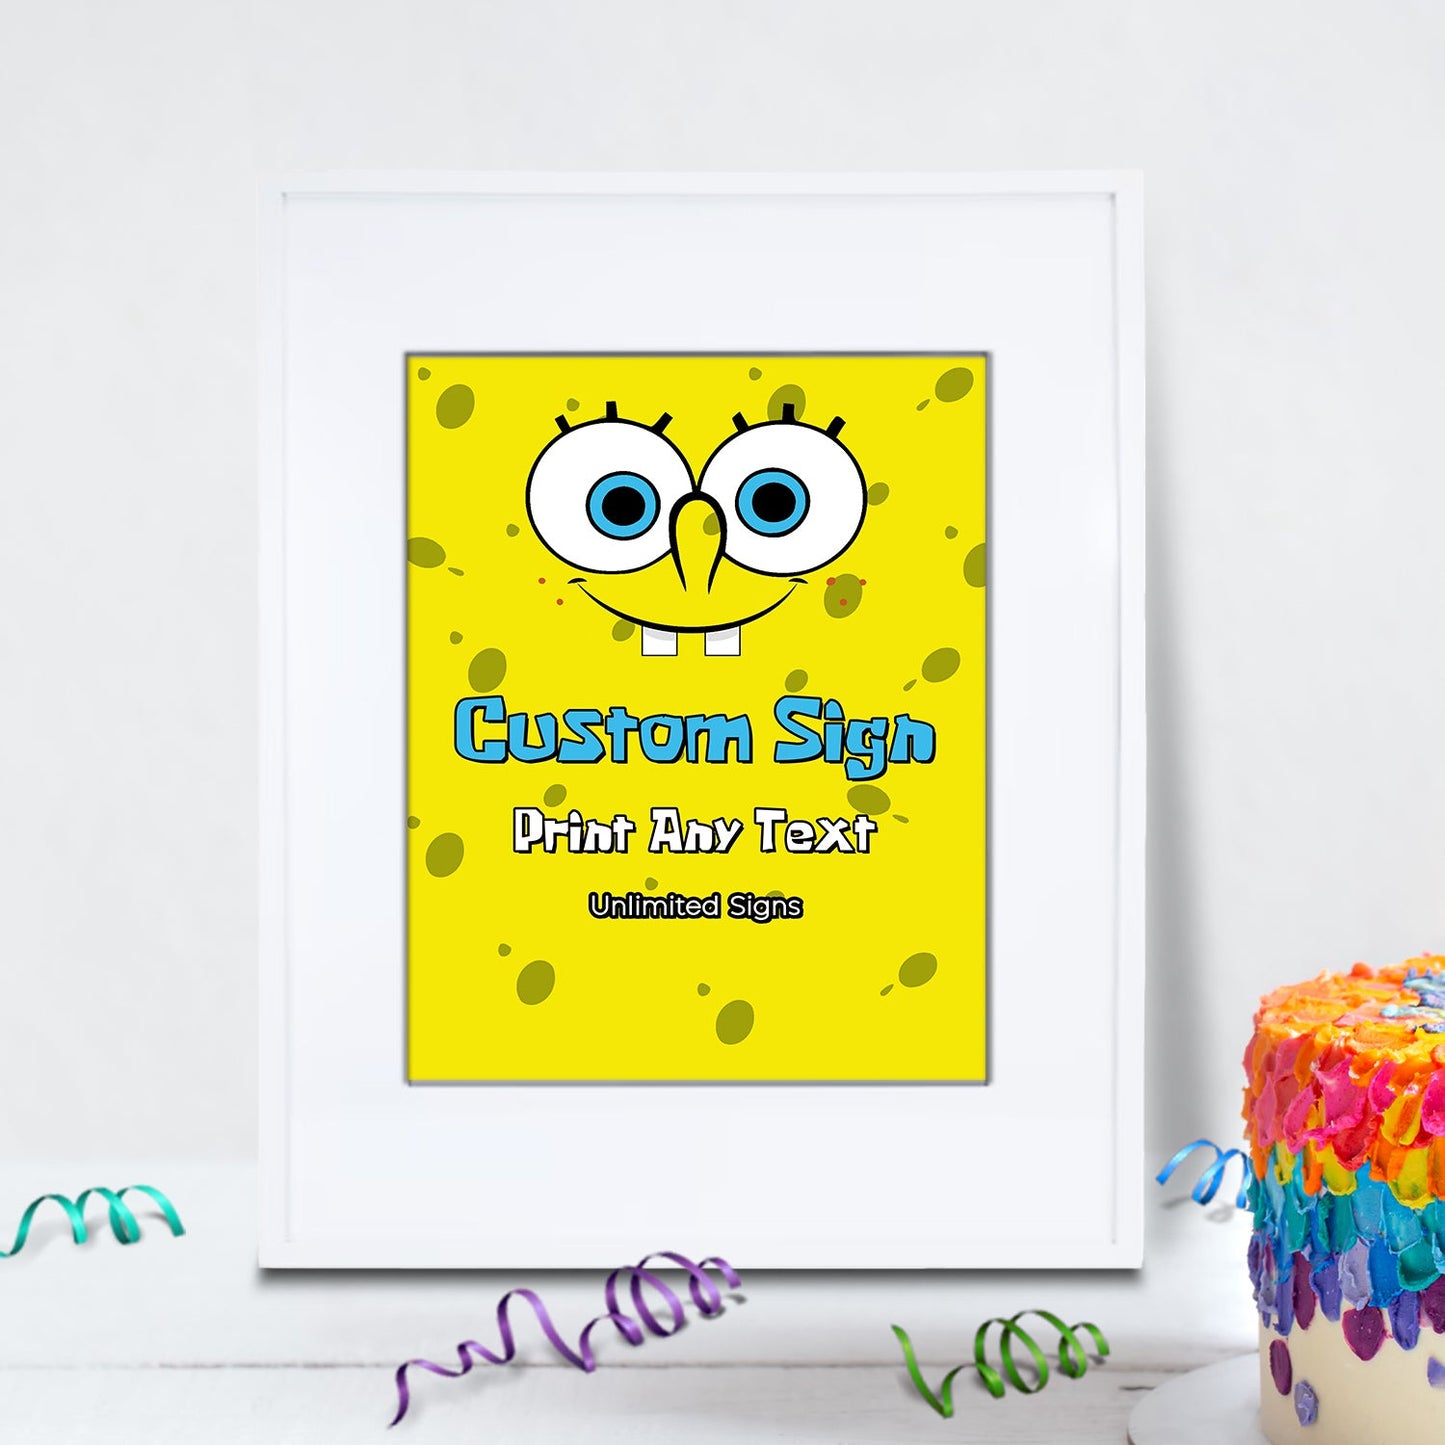 Spongebob SquarePants Birthday Decorations, Mr. Krabs Party Supplies, Patrick Star, Spongebob, SpongeBob SVG